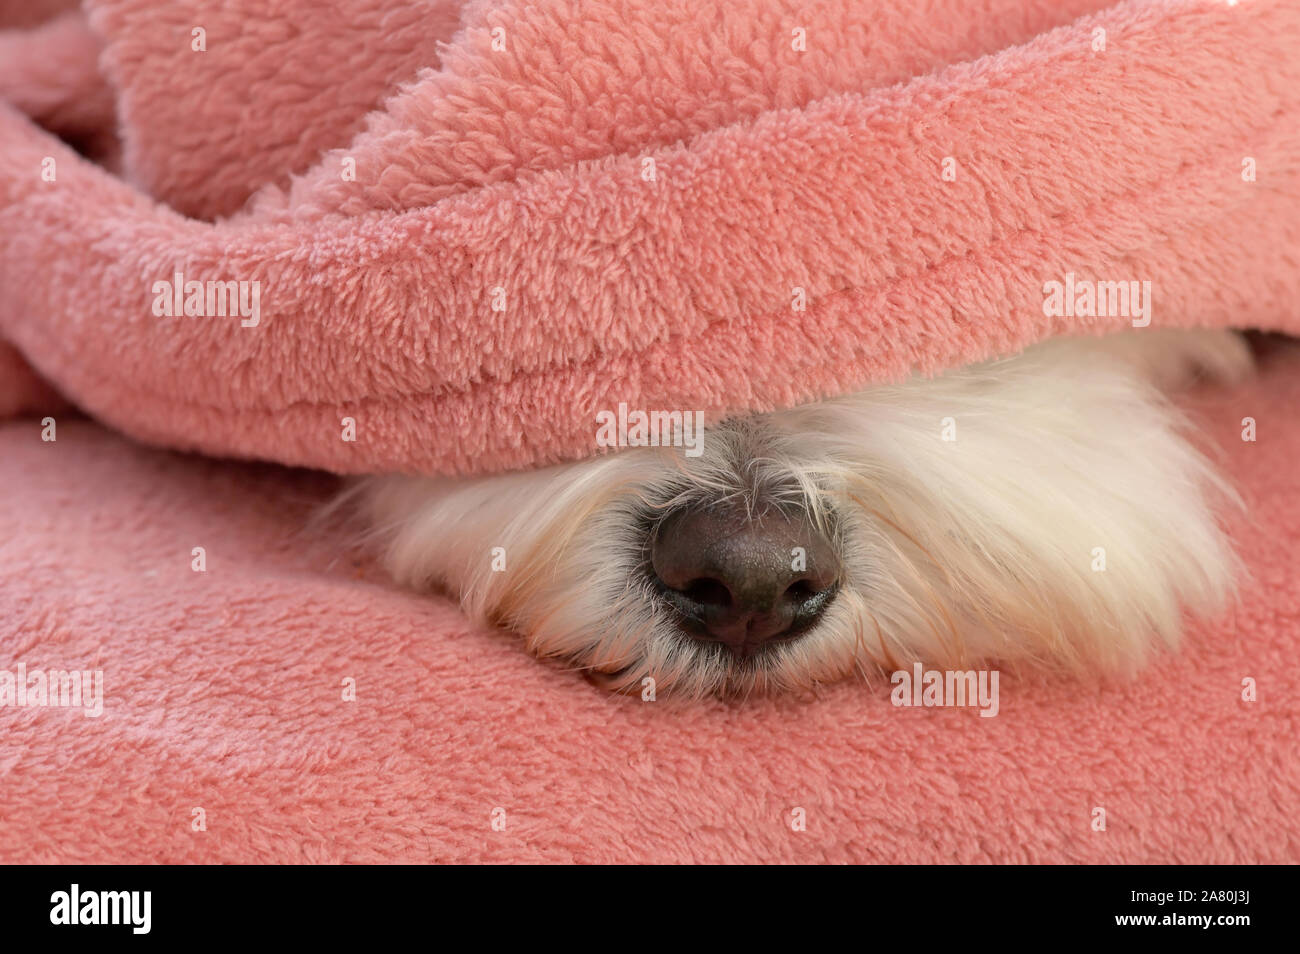 Nase Malteser Hund unter Decke entspannen Stockfotografie - Alamy